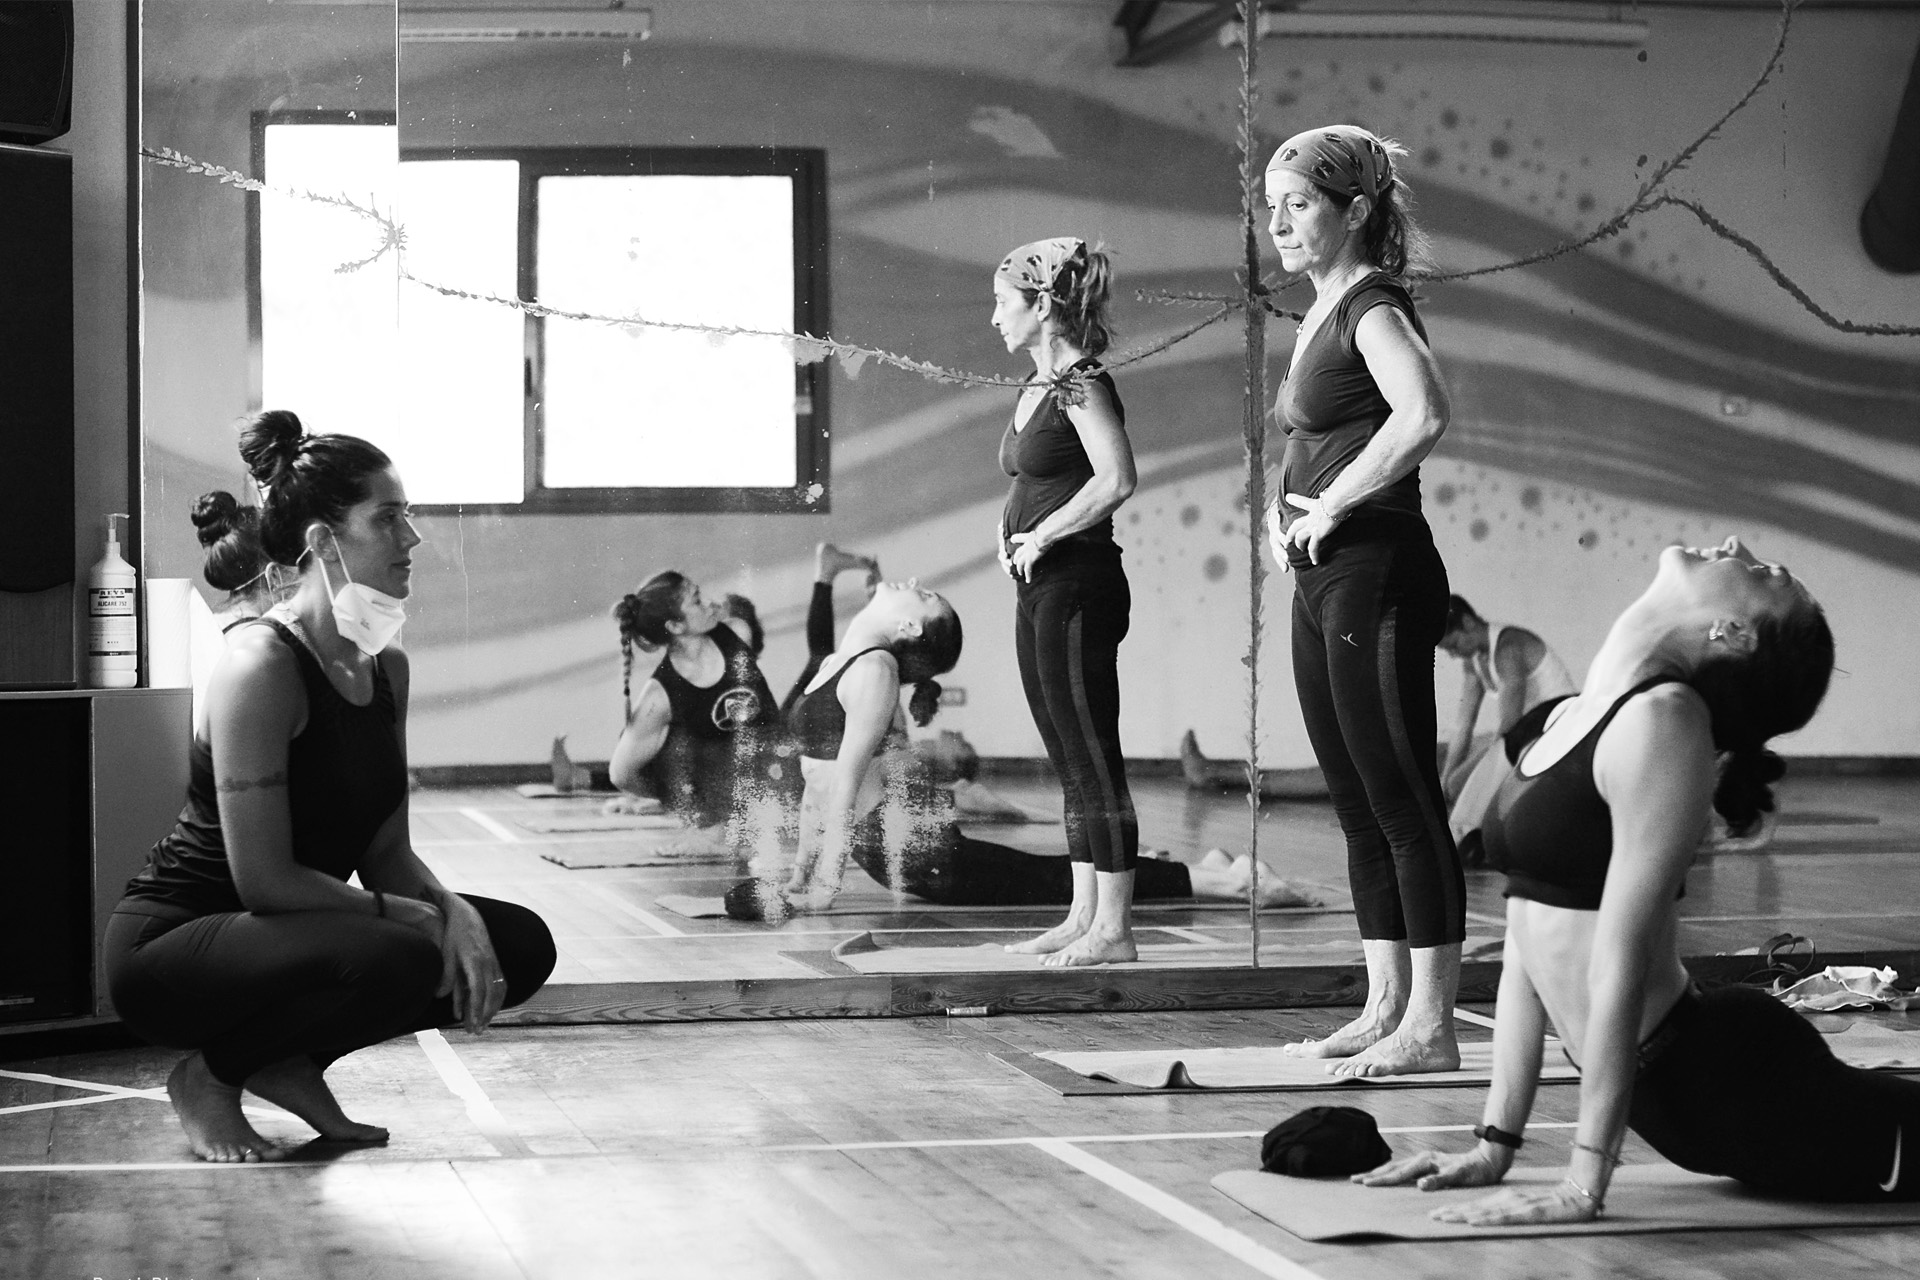 yogaframes.it - fotografi di Yoga, ritratti fotografici Yoga, fotografia Yoga, fotografie di Ashtanga Yoga, servizi fotografici workshop yoga